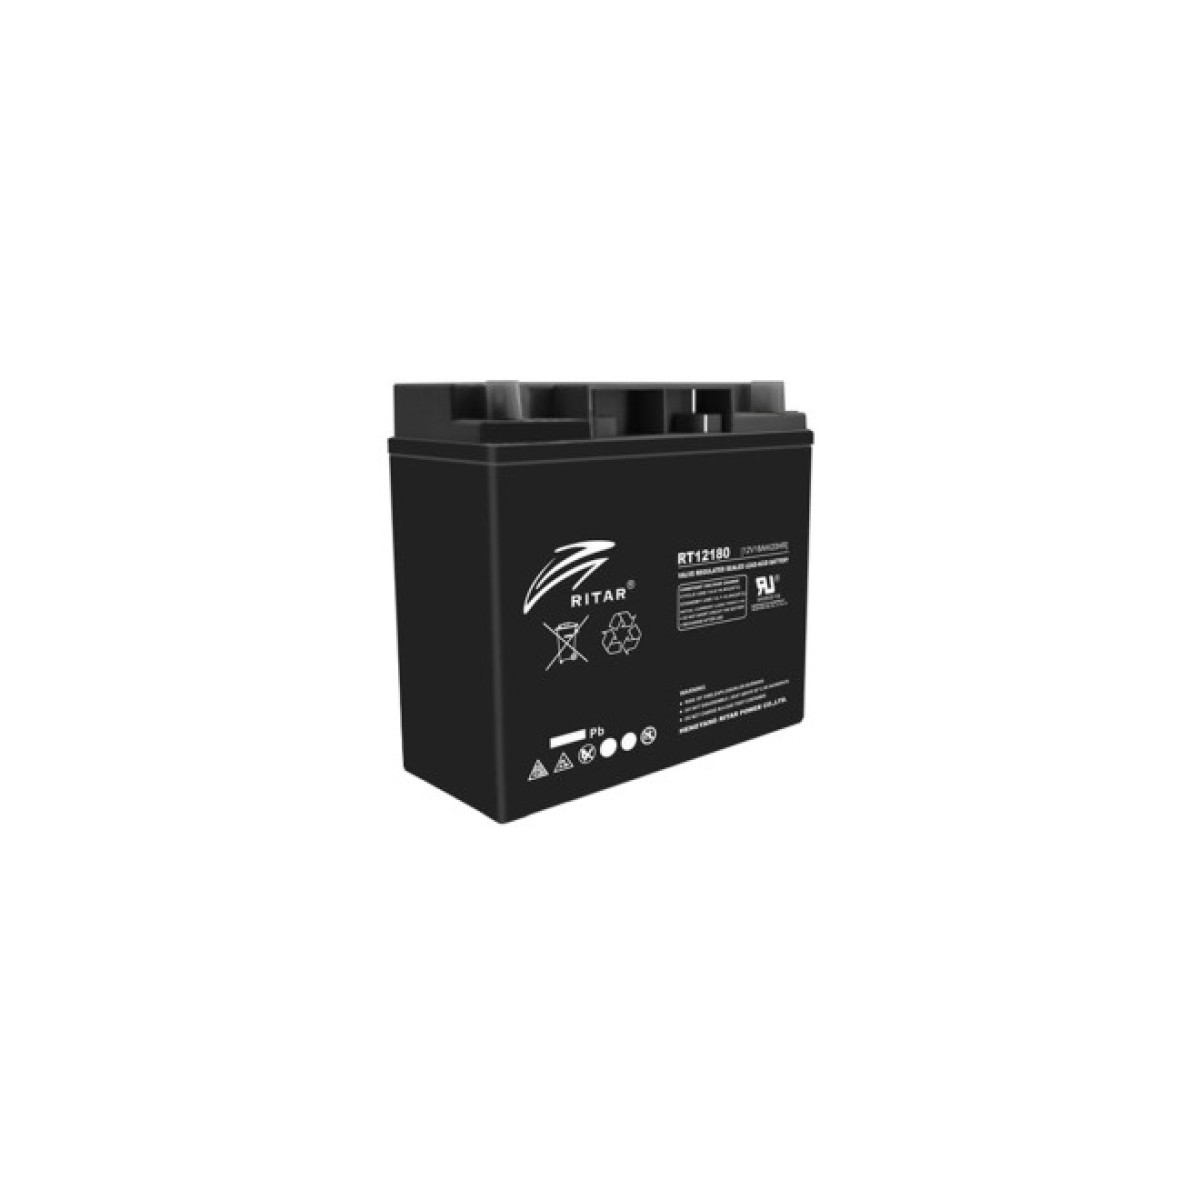 Батарея к ИБП Ritar AGM RT12180B, 12V-18Ah, Black (RT12180B) 98_98.jpg